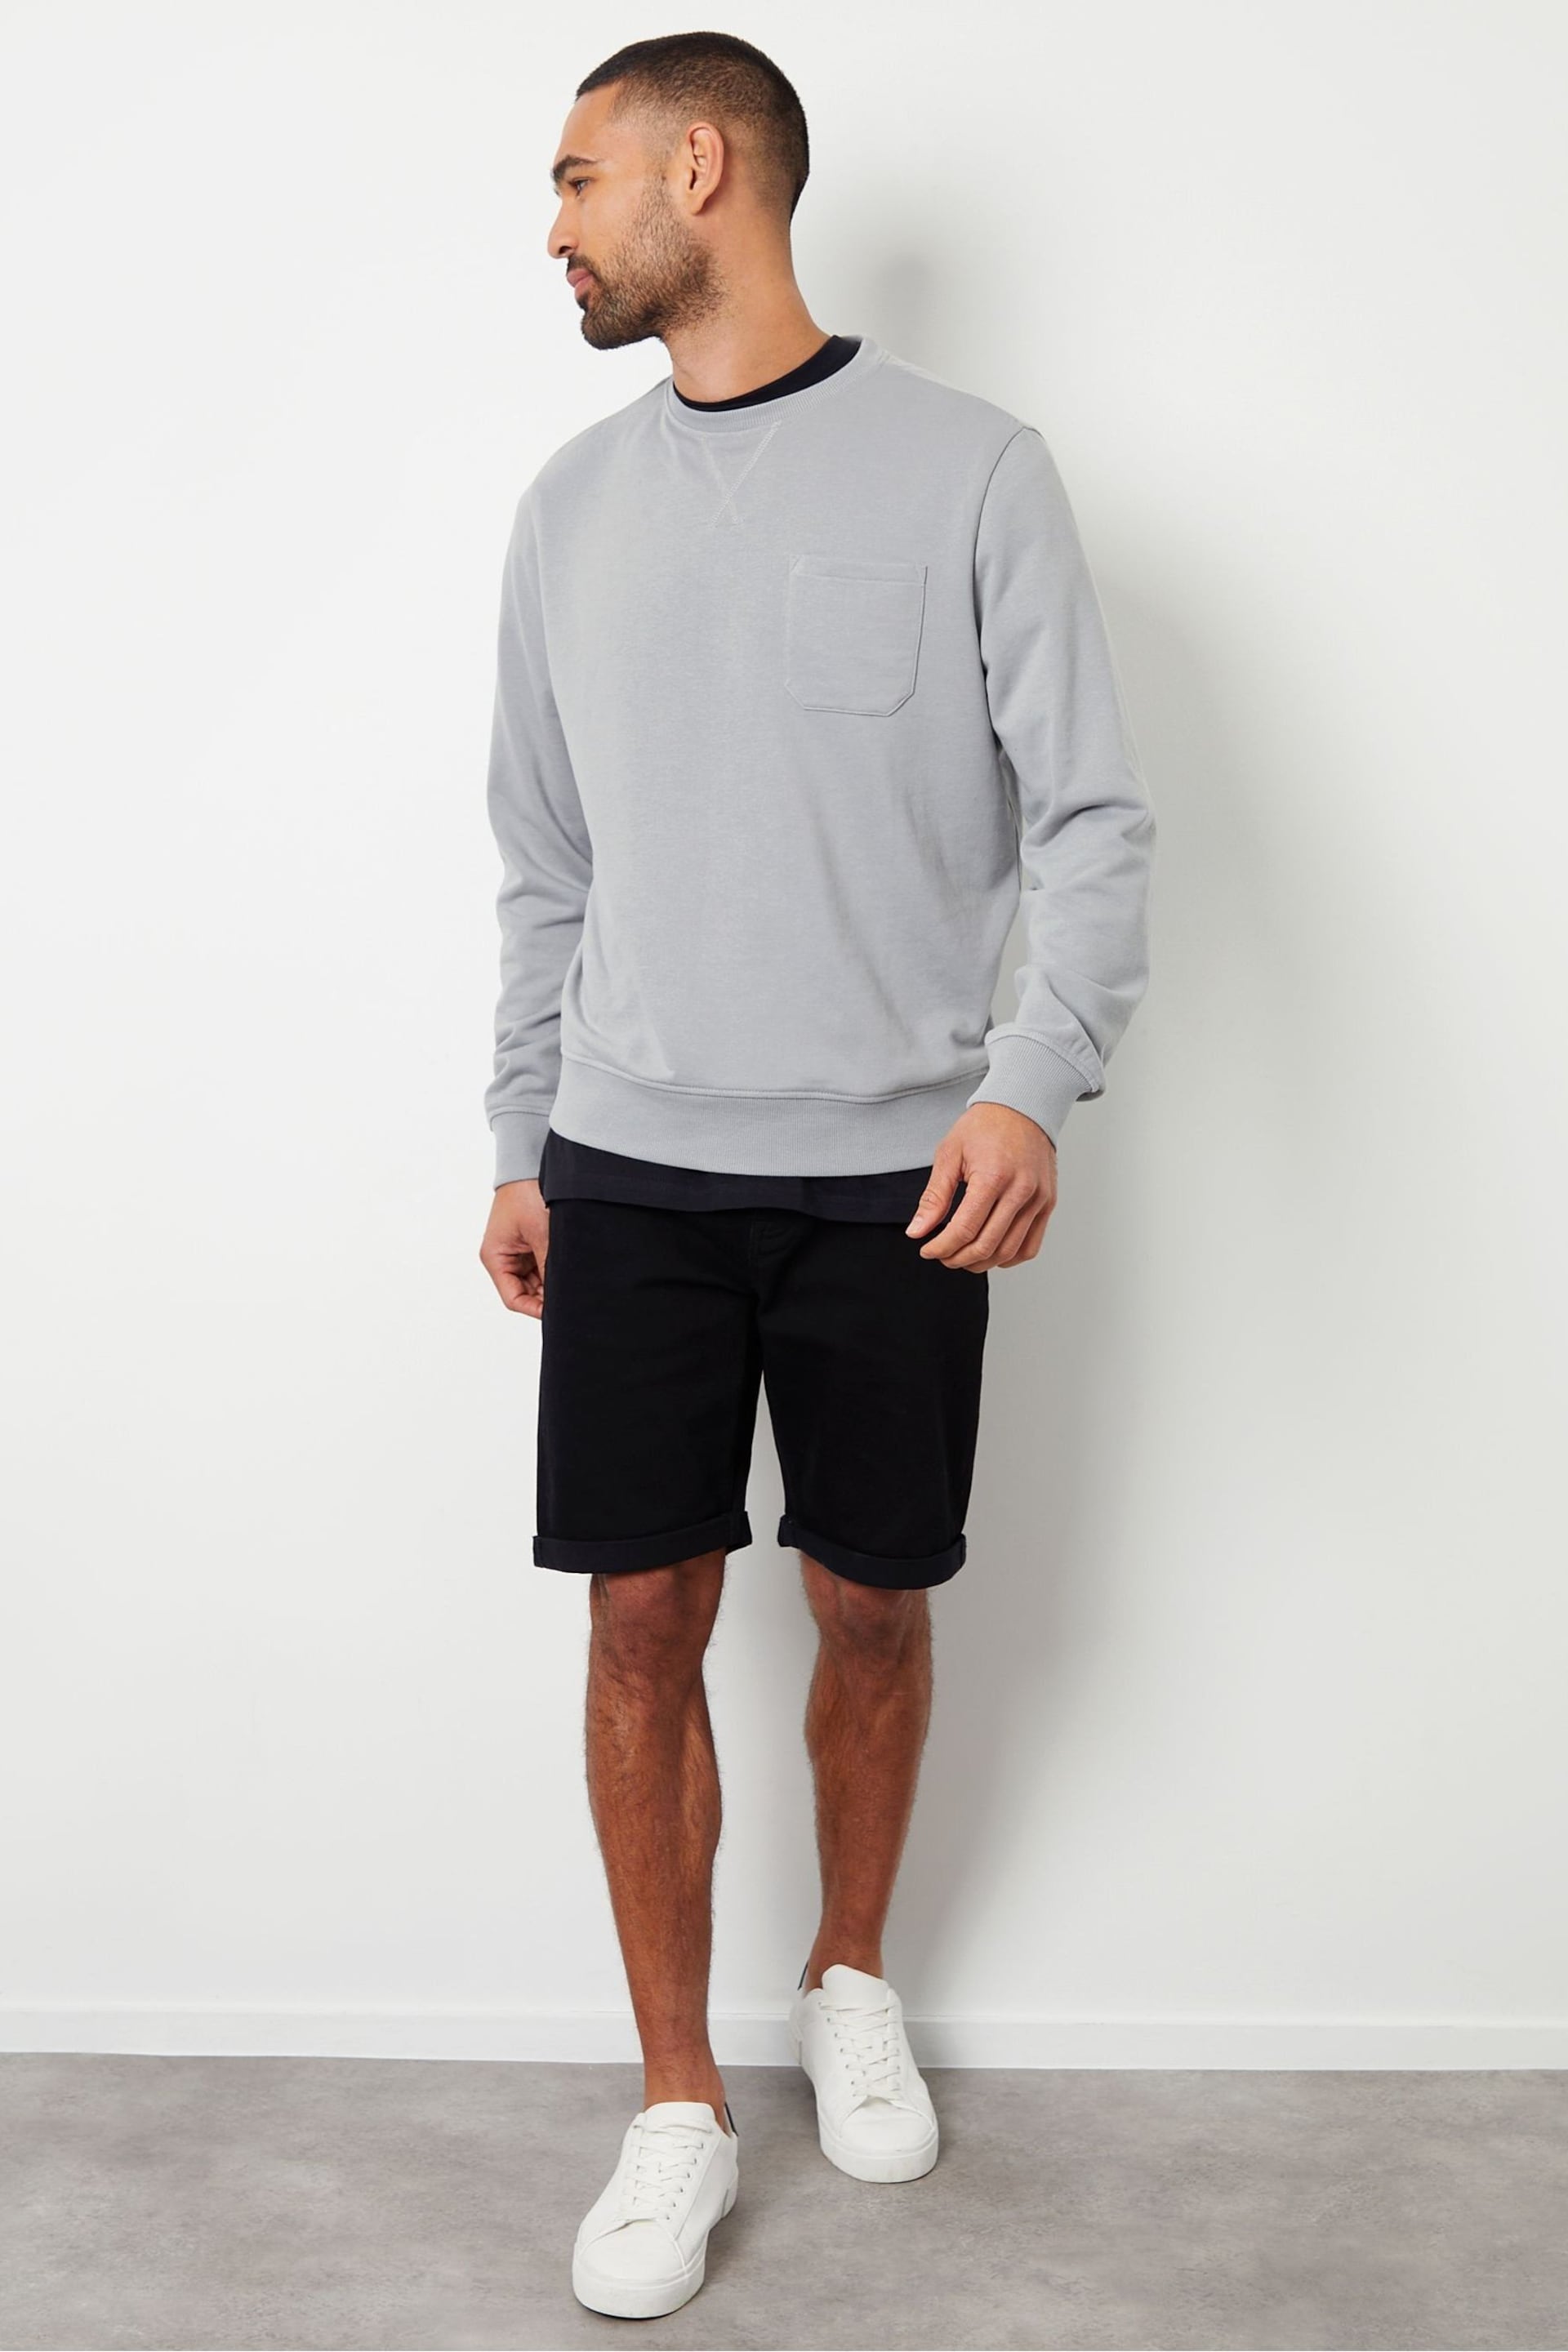 Threadbare Grey Crew Neck Sweatshirt with Pocket - Image 3 of 4